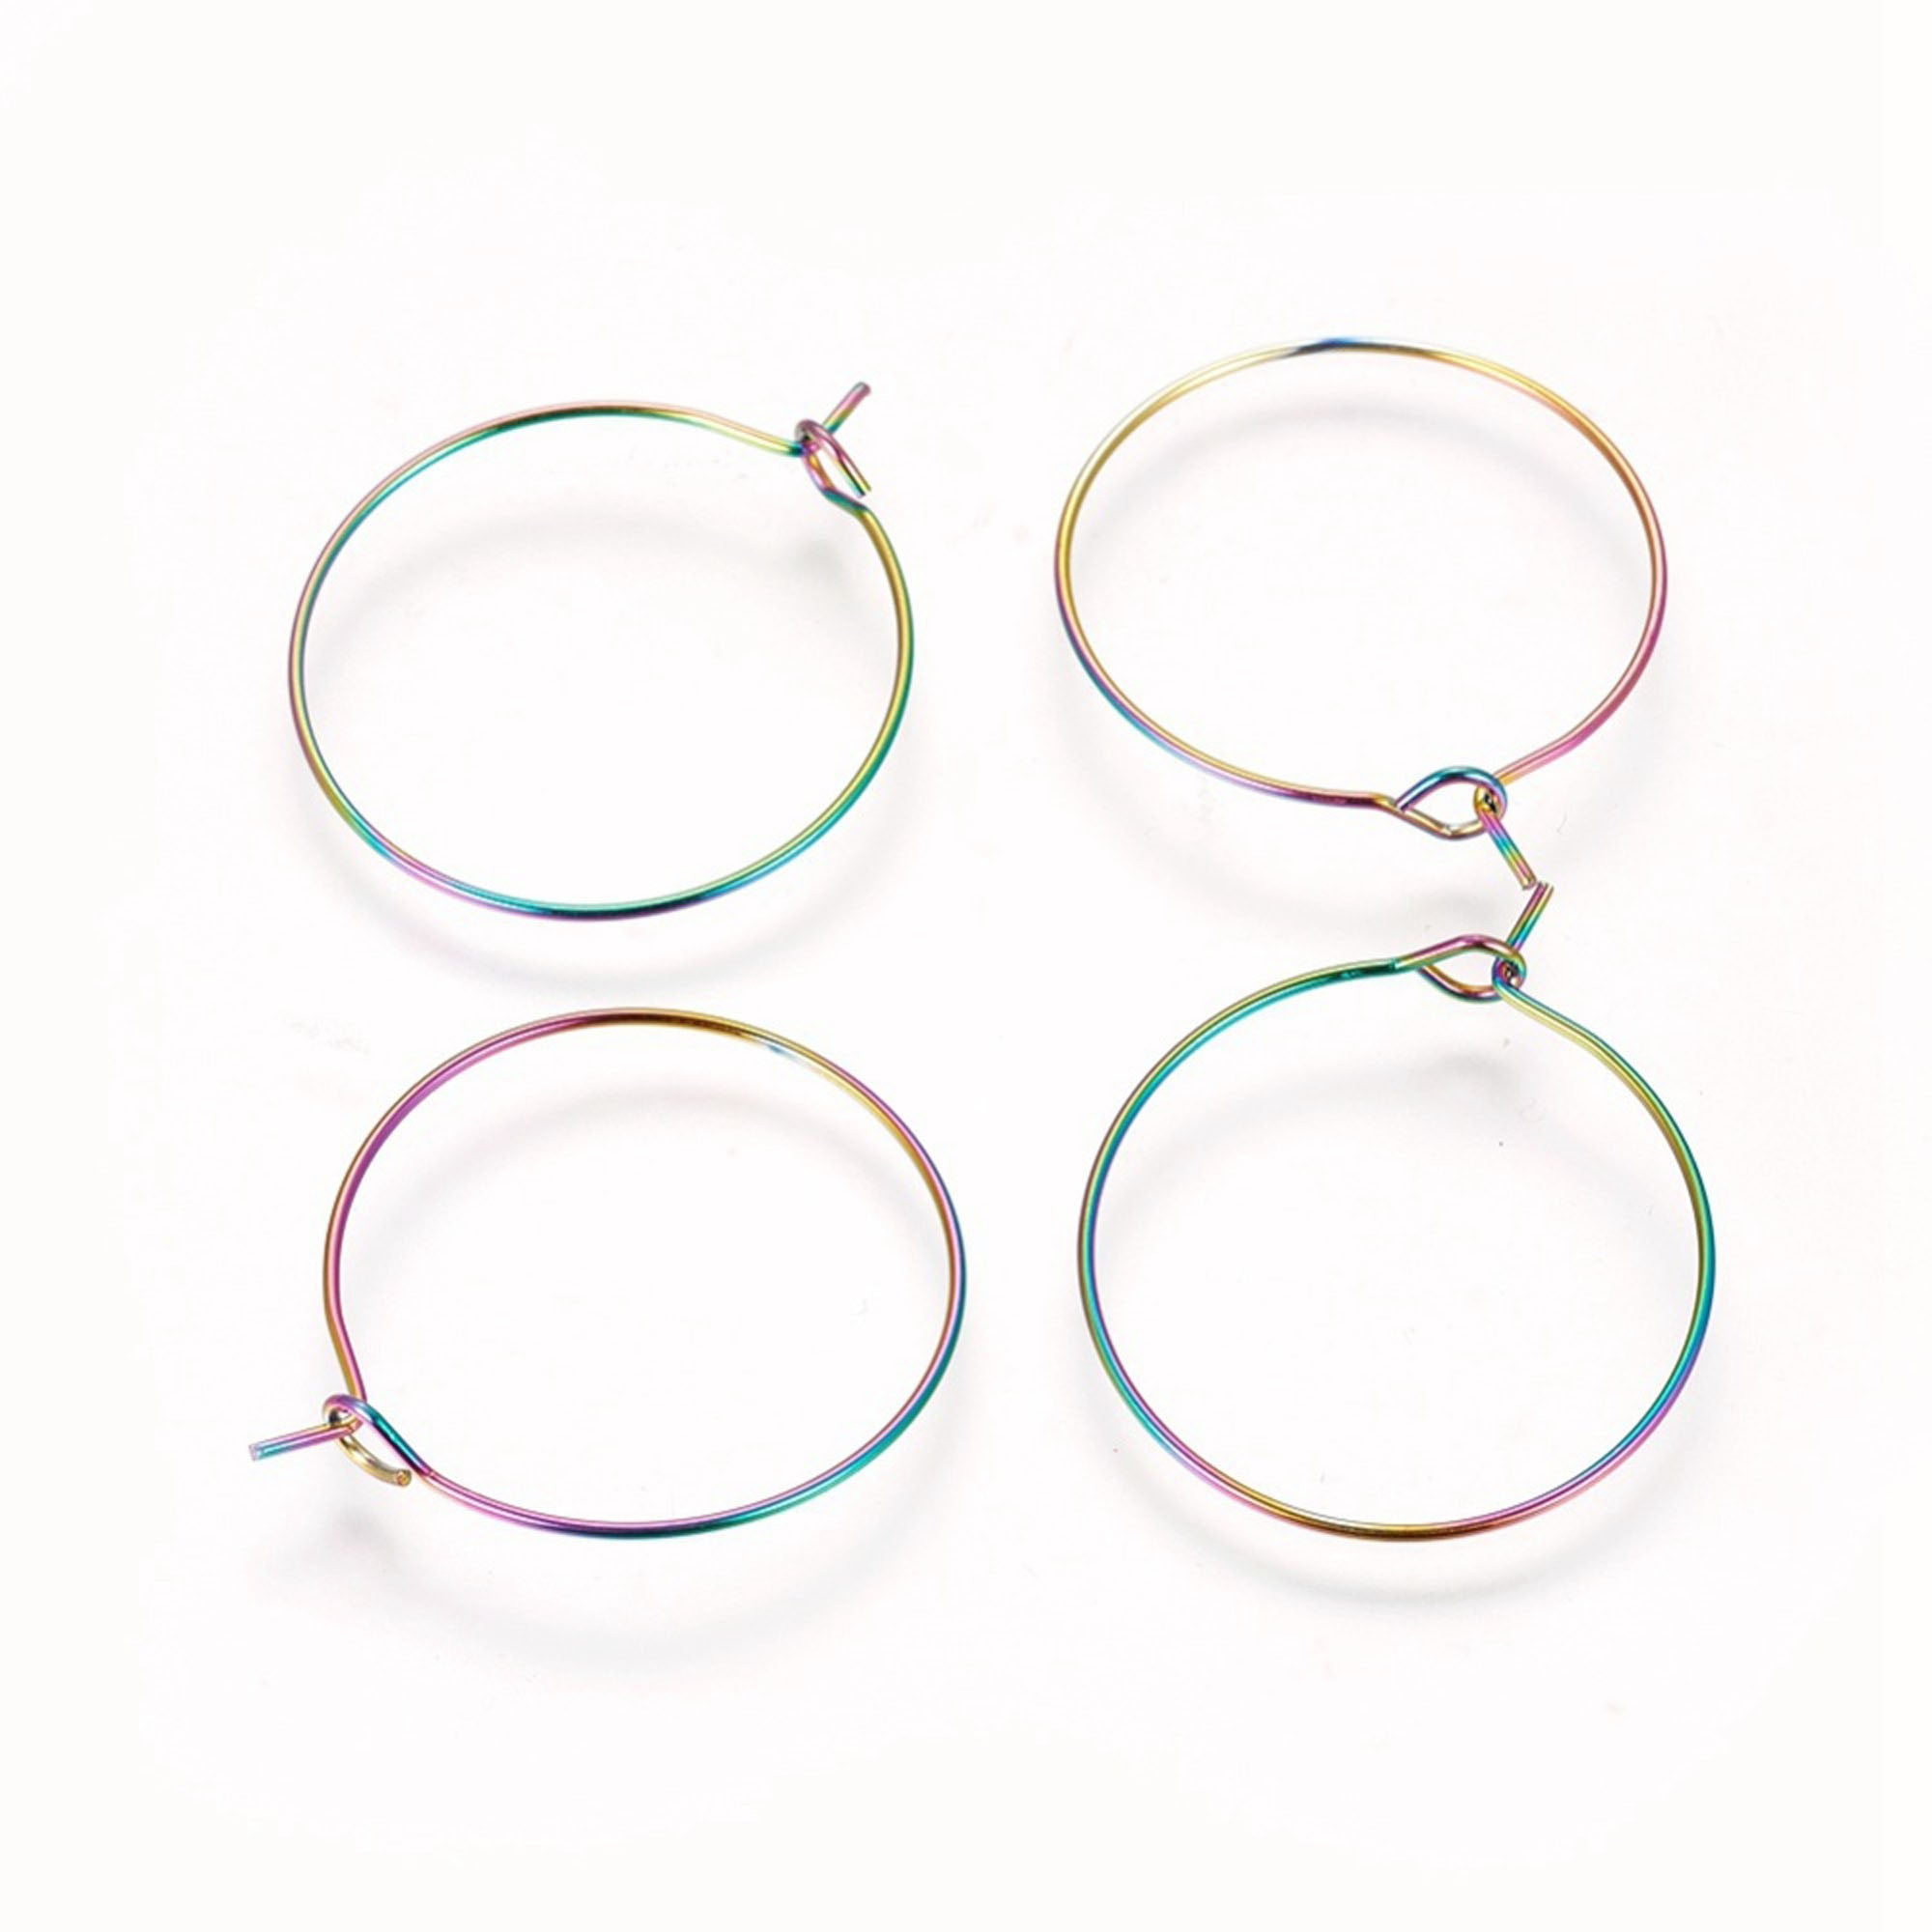 Duehut HLLMX 100 Pcs 30mm Wine Glass Charm Rings Hypoallergenic Steel Circle Earring Loops Wires Open Earring Beading Hoop Rings for Earrings